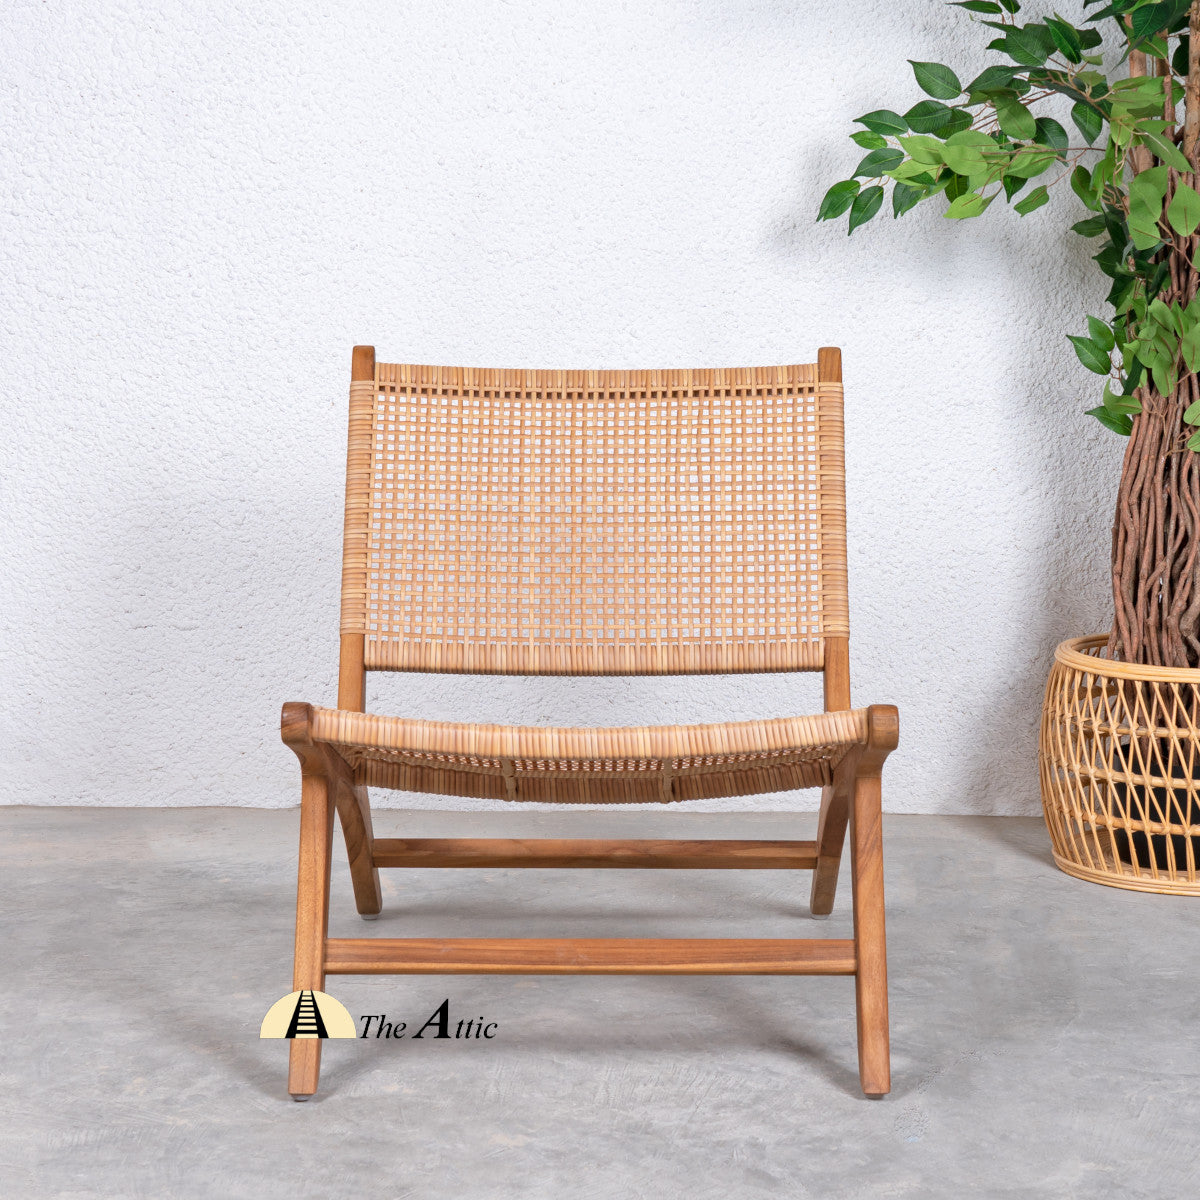 Kanha Kanha All-Weather Rattan & Teak Lounge Chair ; Synthetic Rattan Wicker Furniture; Outdoor rattan furniture - TheAtticDubai.com